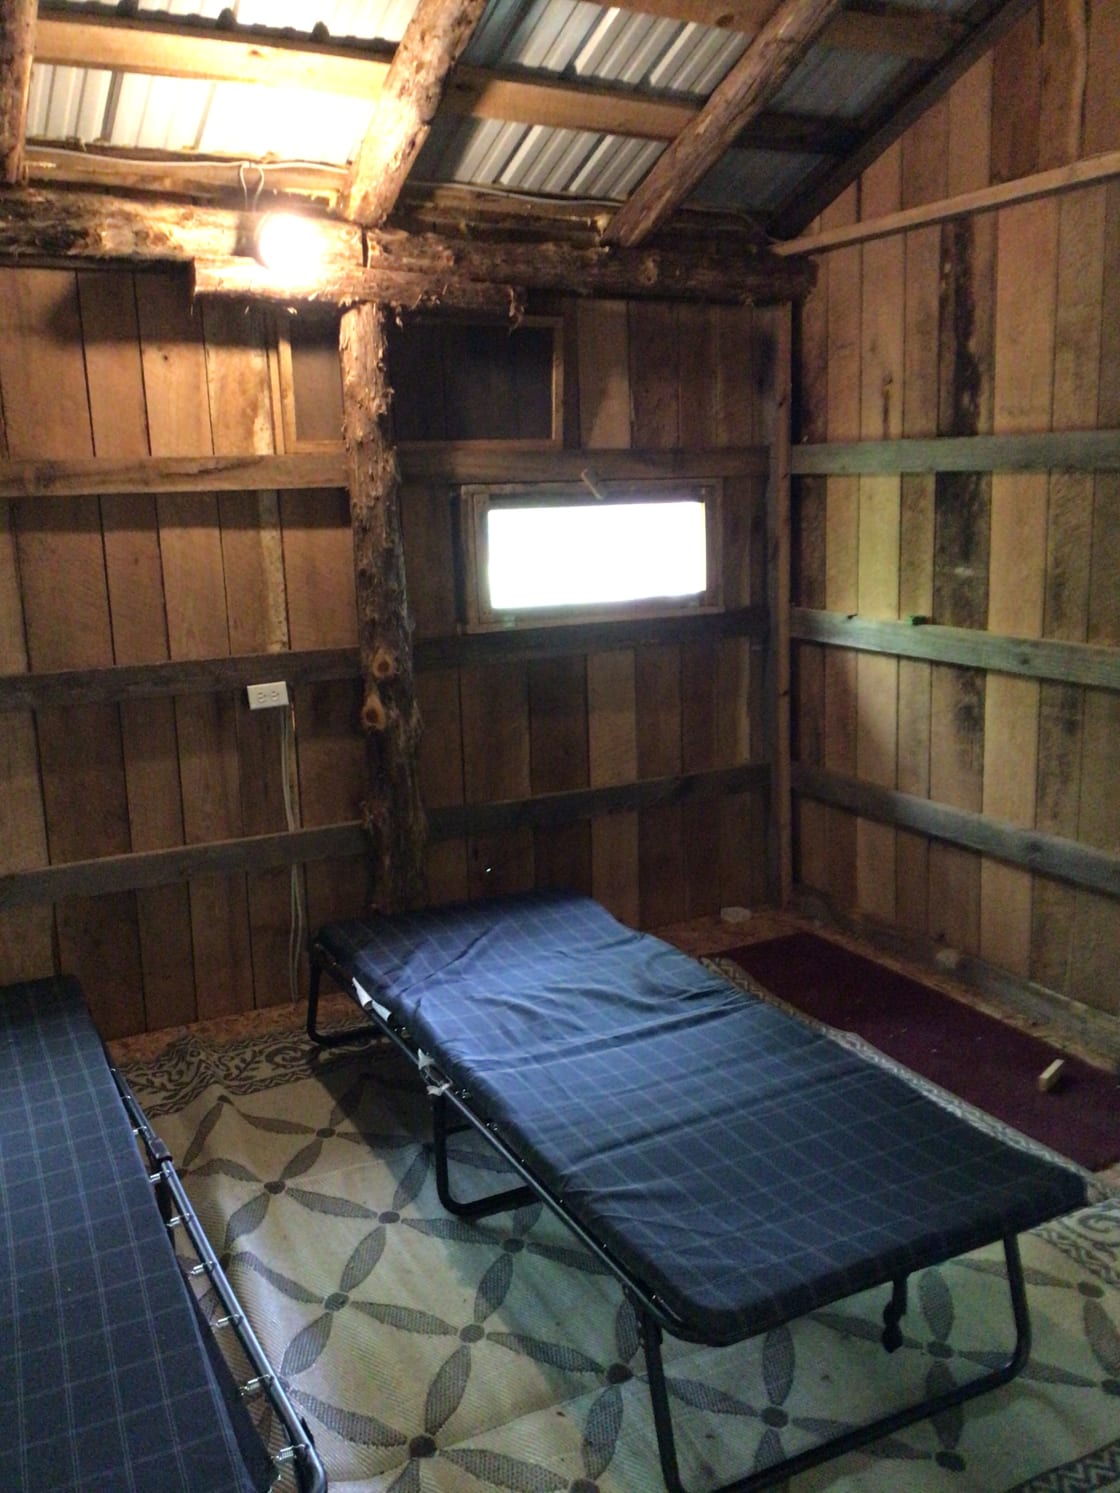 Inside the cabin.